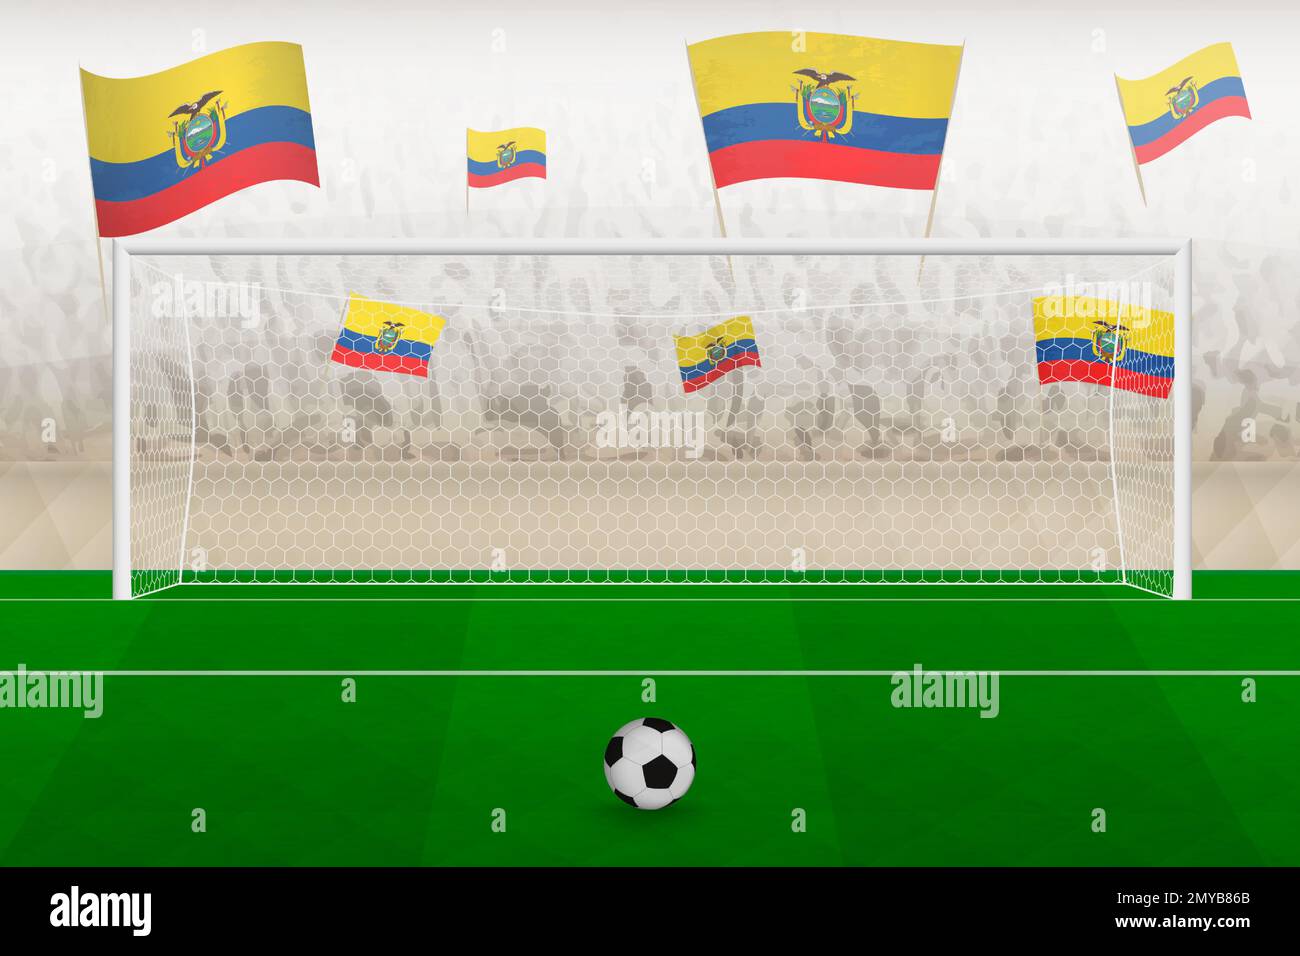 Ecuador football team fans with flags of Ecuador cheering on stadium, penalty kick concept in a soccer match. Sports vector illustration. Stock Vector